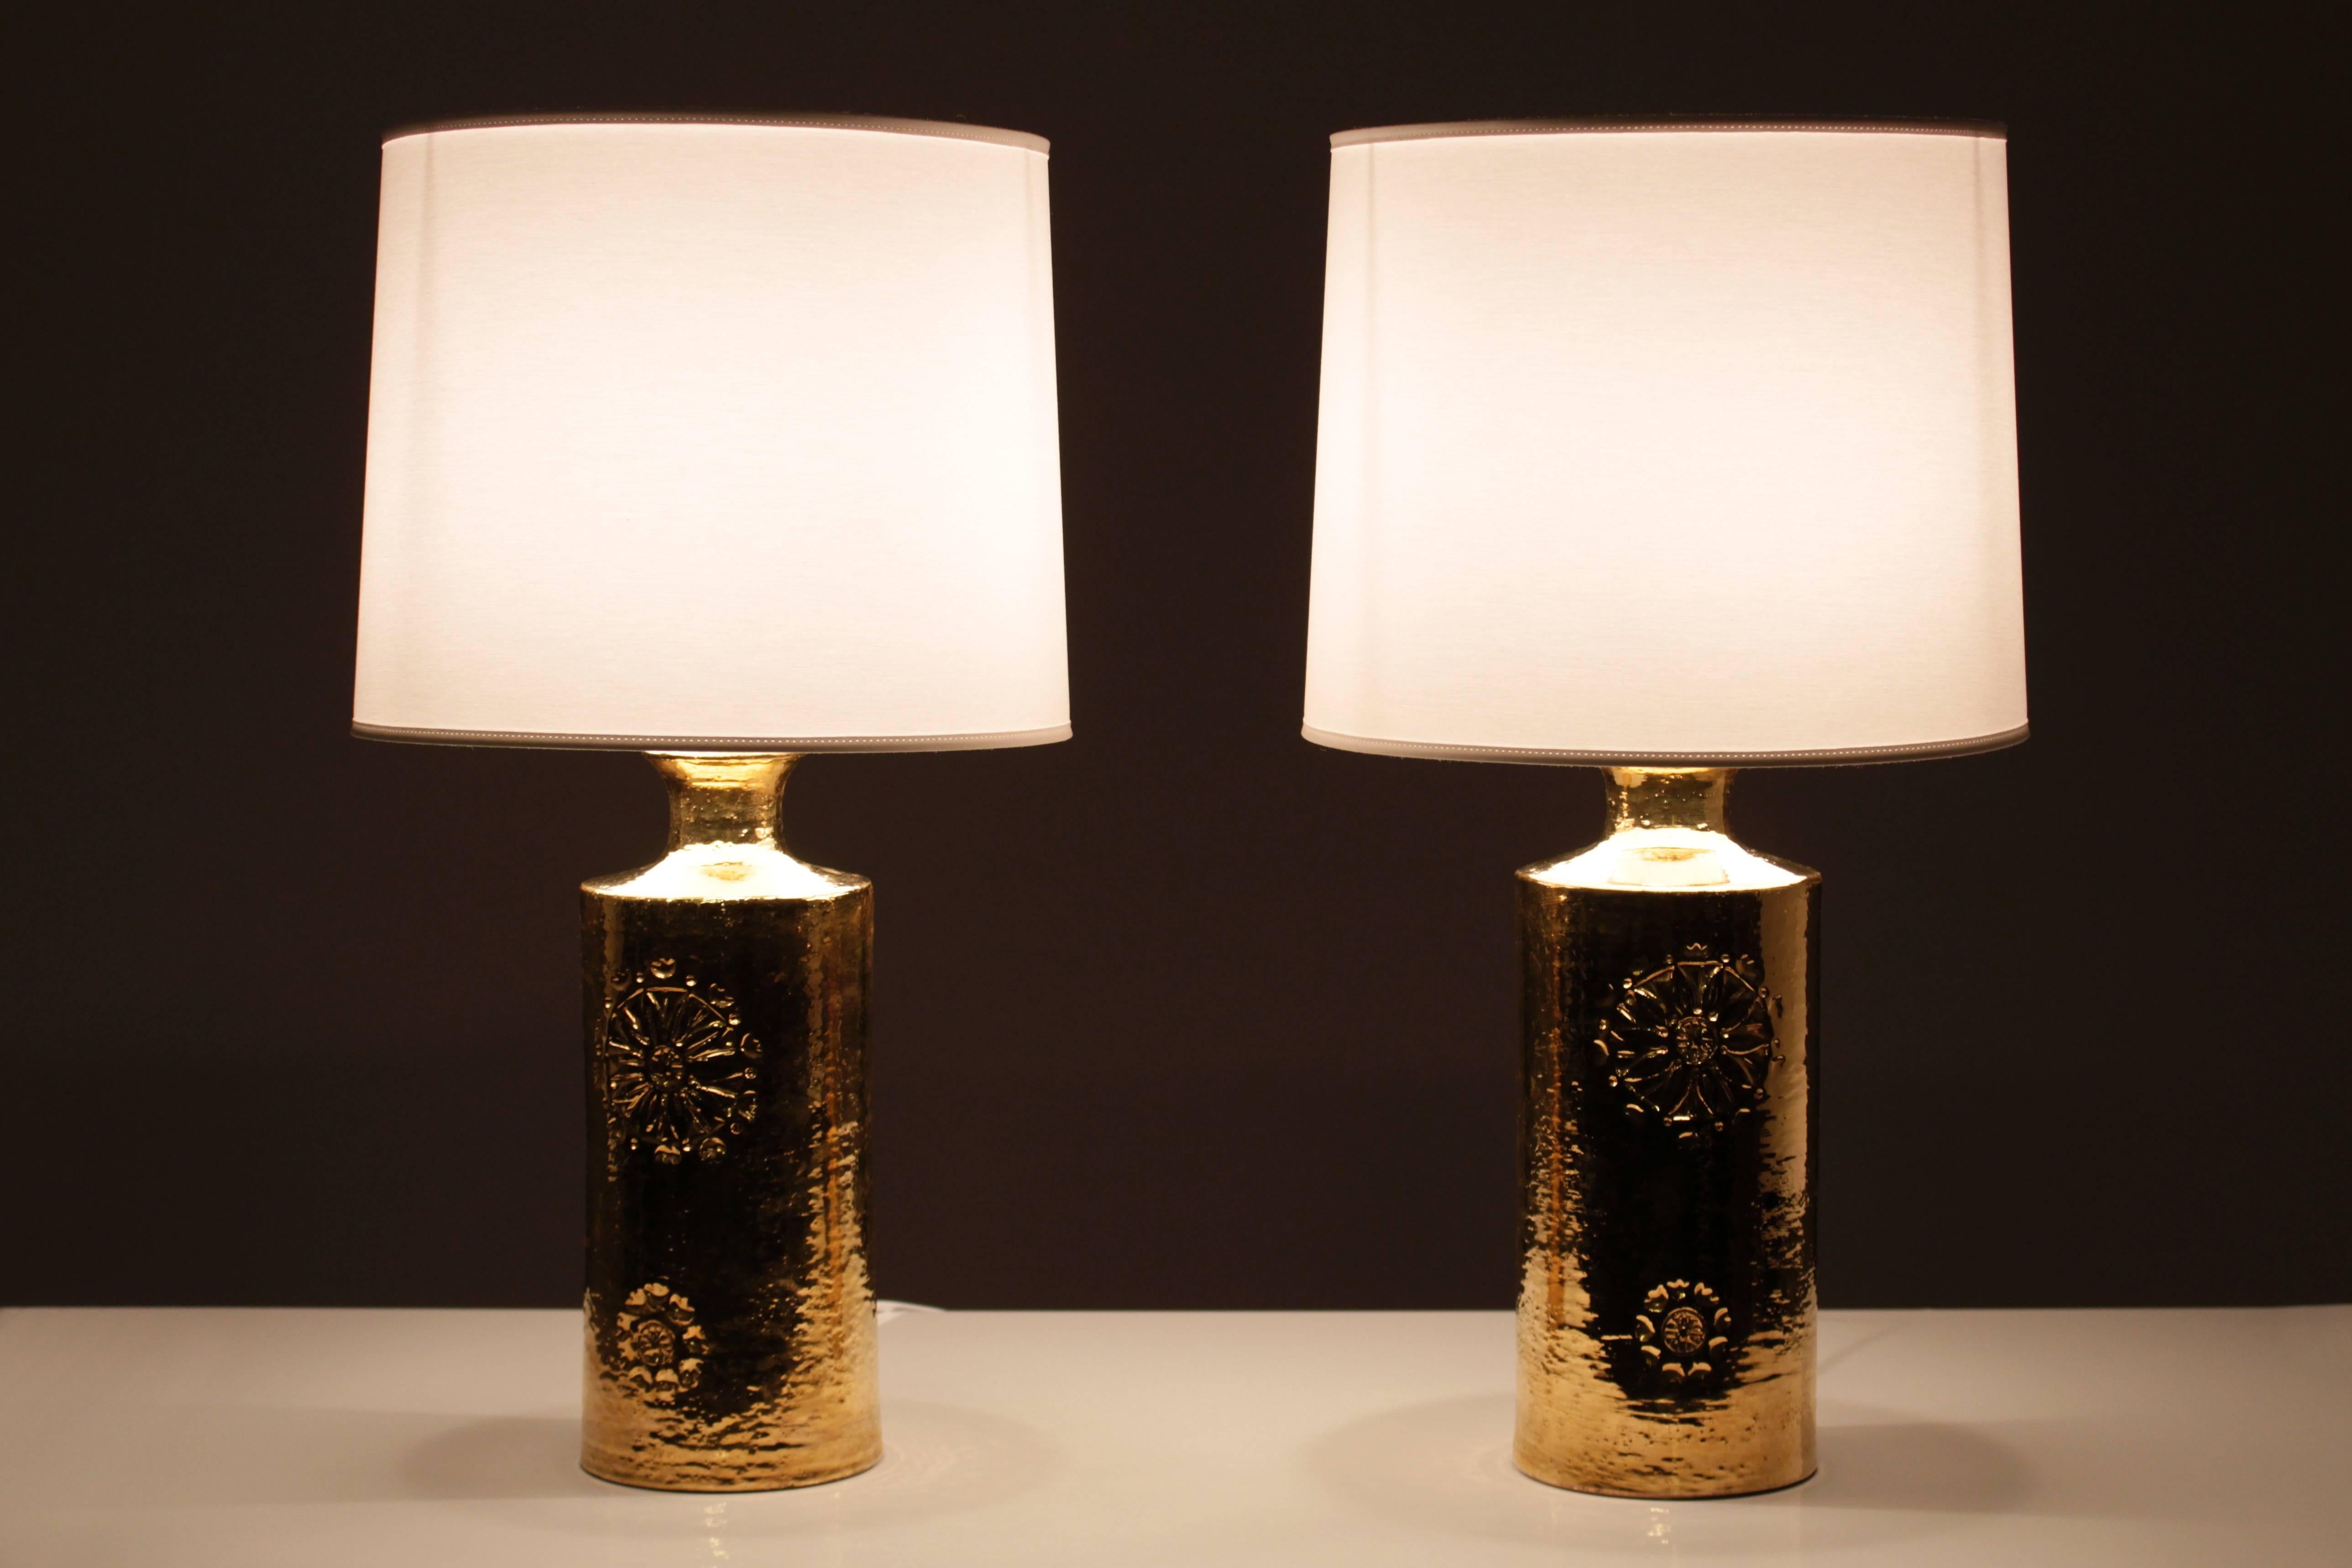 20th Century Pair of 22-Karat Gold Glazed Ceramic Lamps by Bitossi for Bergboms